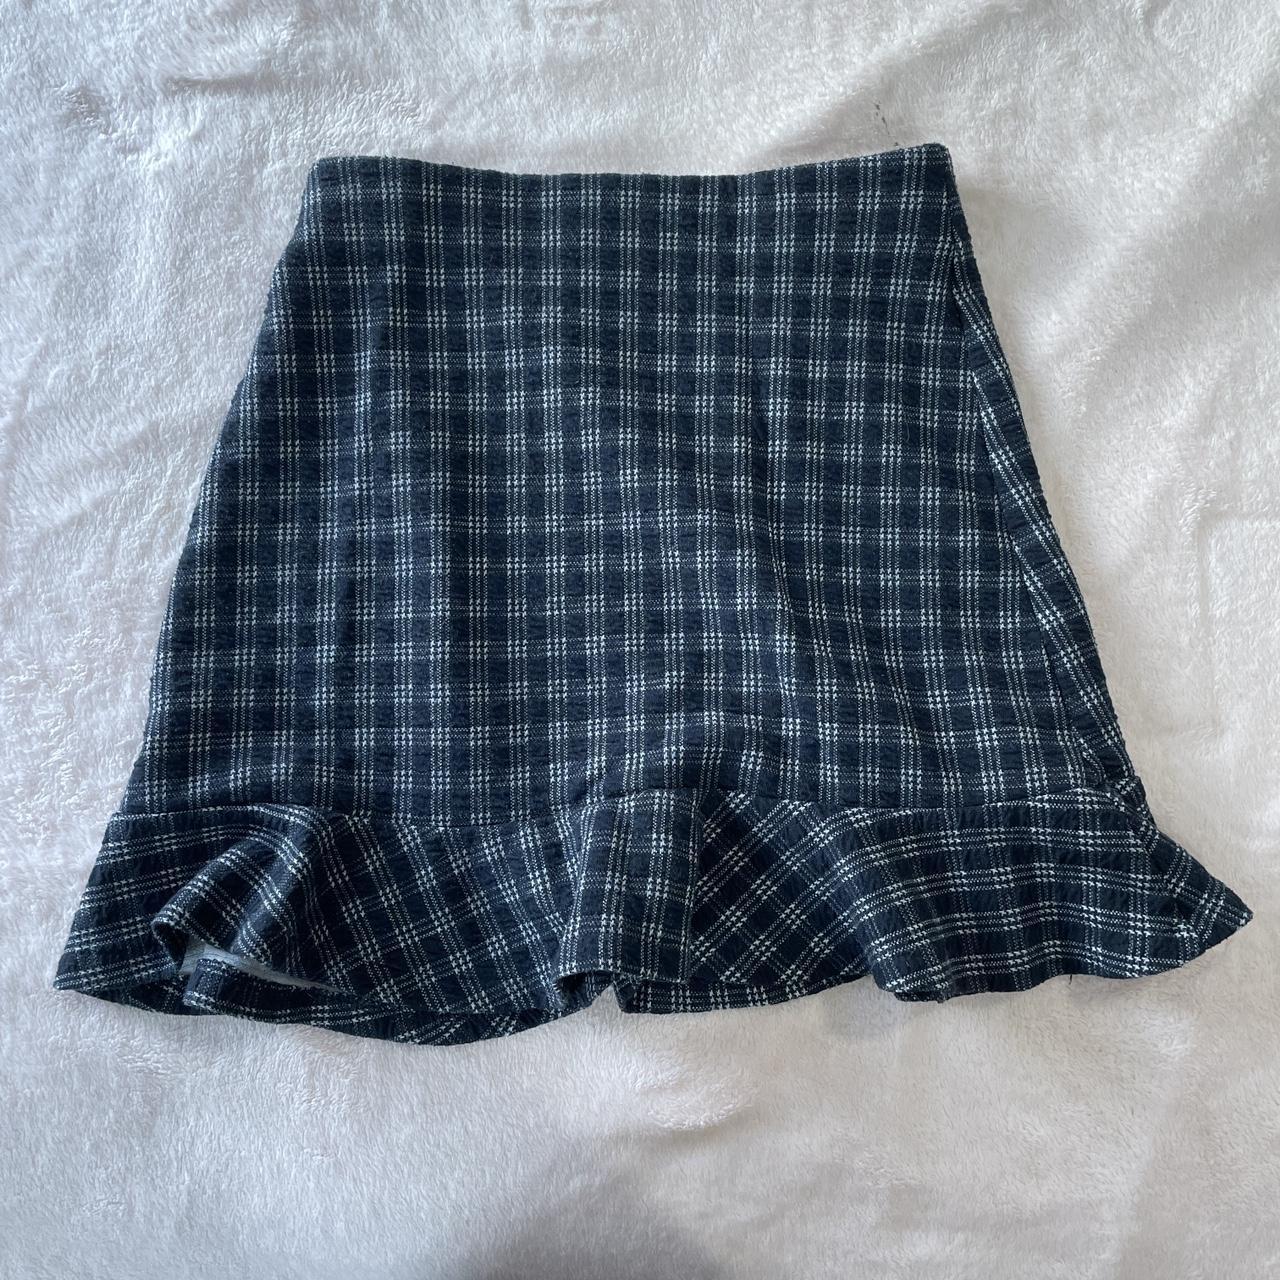 Cute plaid skirt. Fits like an xs. - Depop